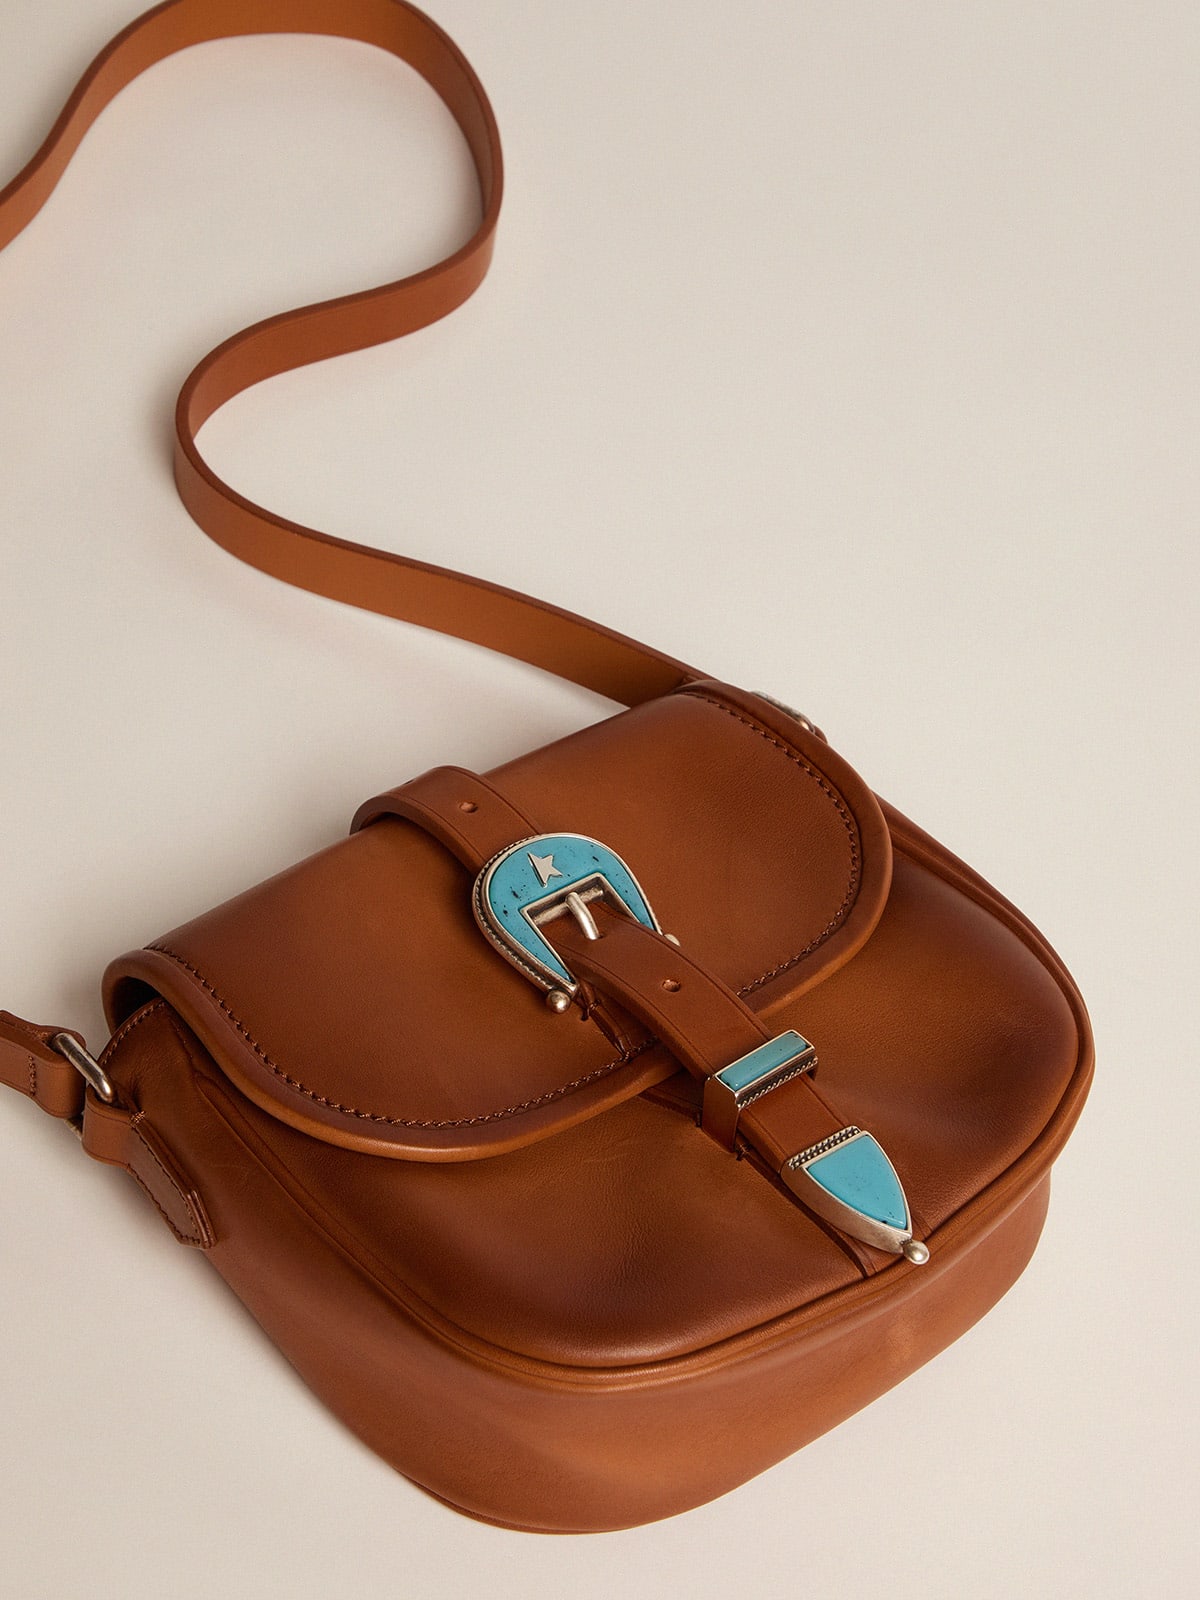 Golden Goose - Petit sac Rodeo Bag en cuir marron clair avec boucle bleu ciel     in 